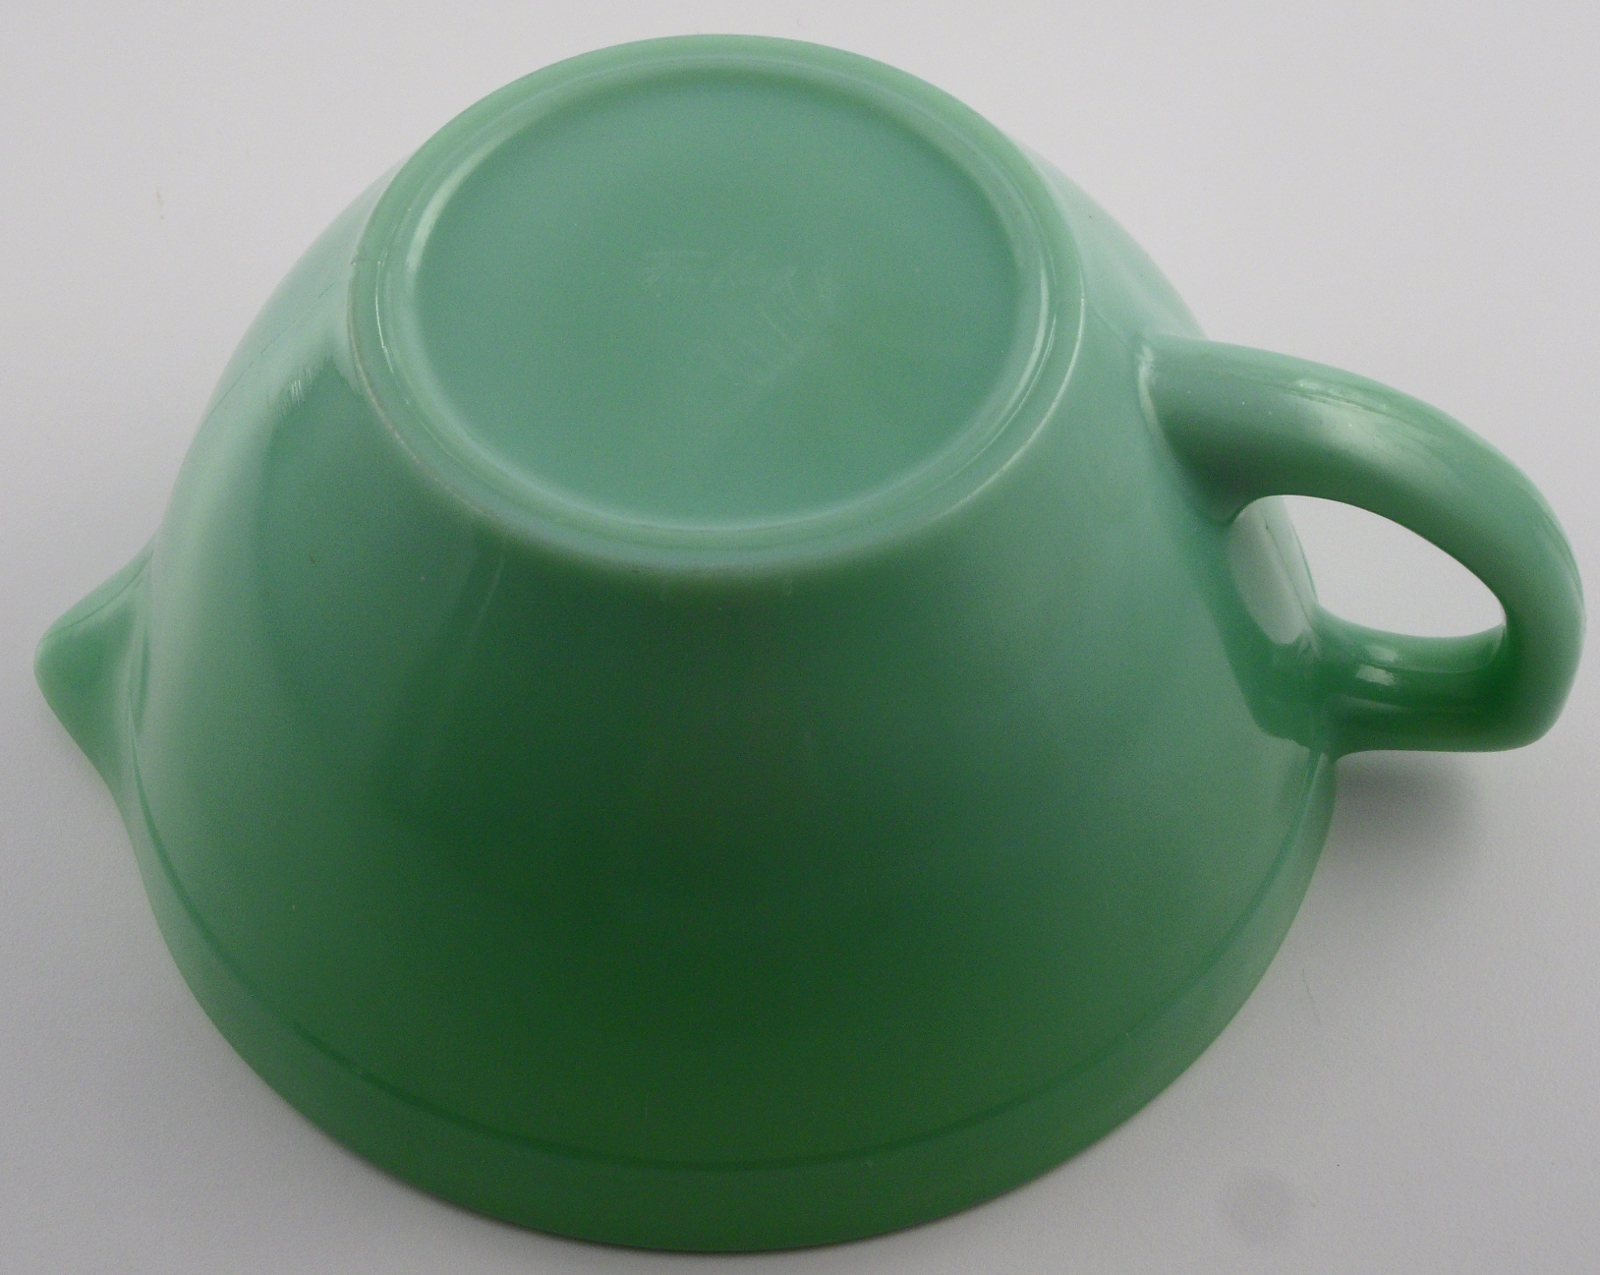 Vintage Jadeite Bowl - 1950's Green Milk Glass Fire King Oven Ware